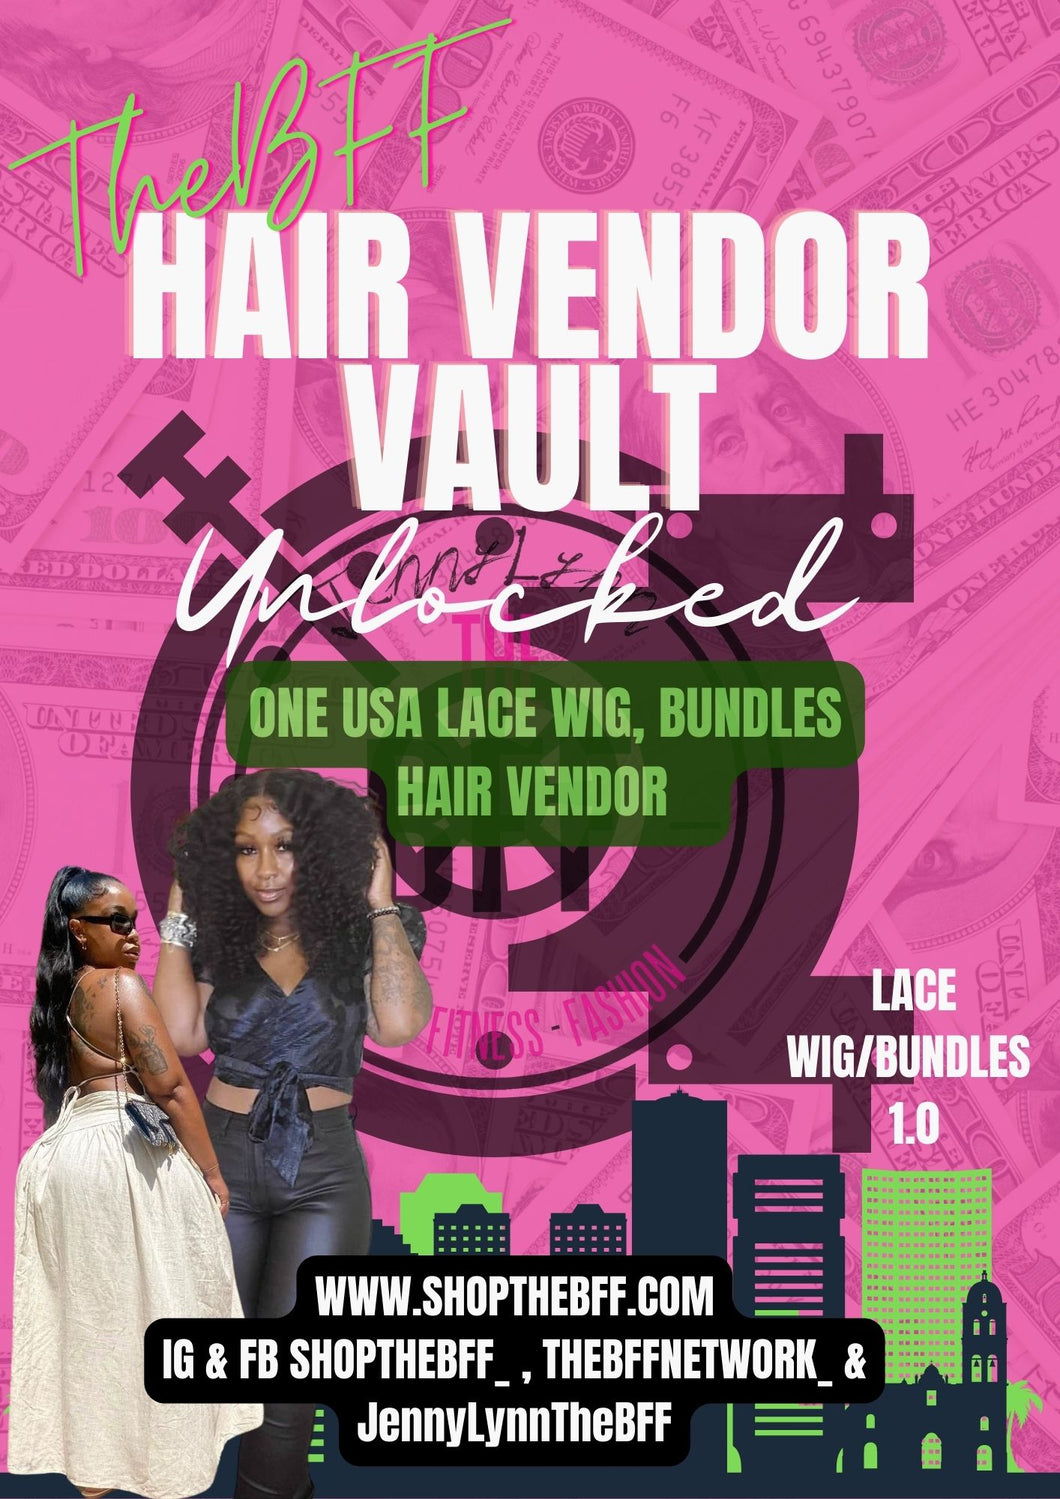 TheBFF USA Lace Wigs/Bundles Vendor Vault 1.0 Edition